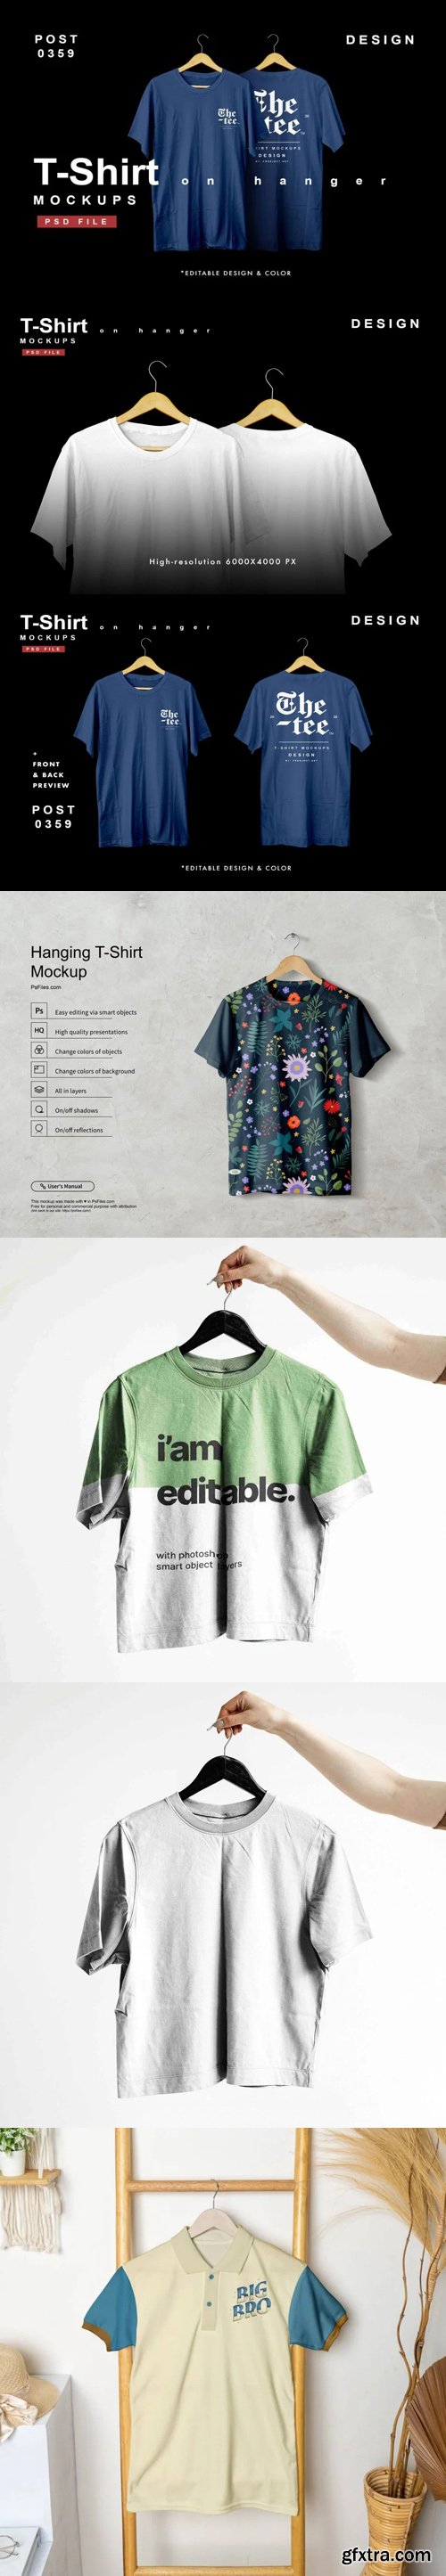 Hanging T-Shirt PSD Mockups Templates Collection